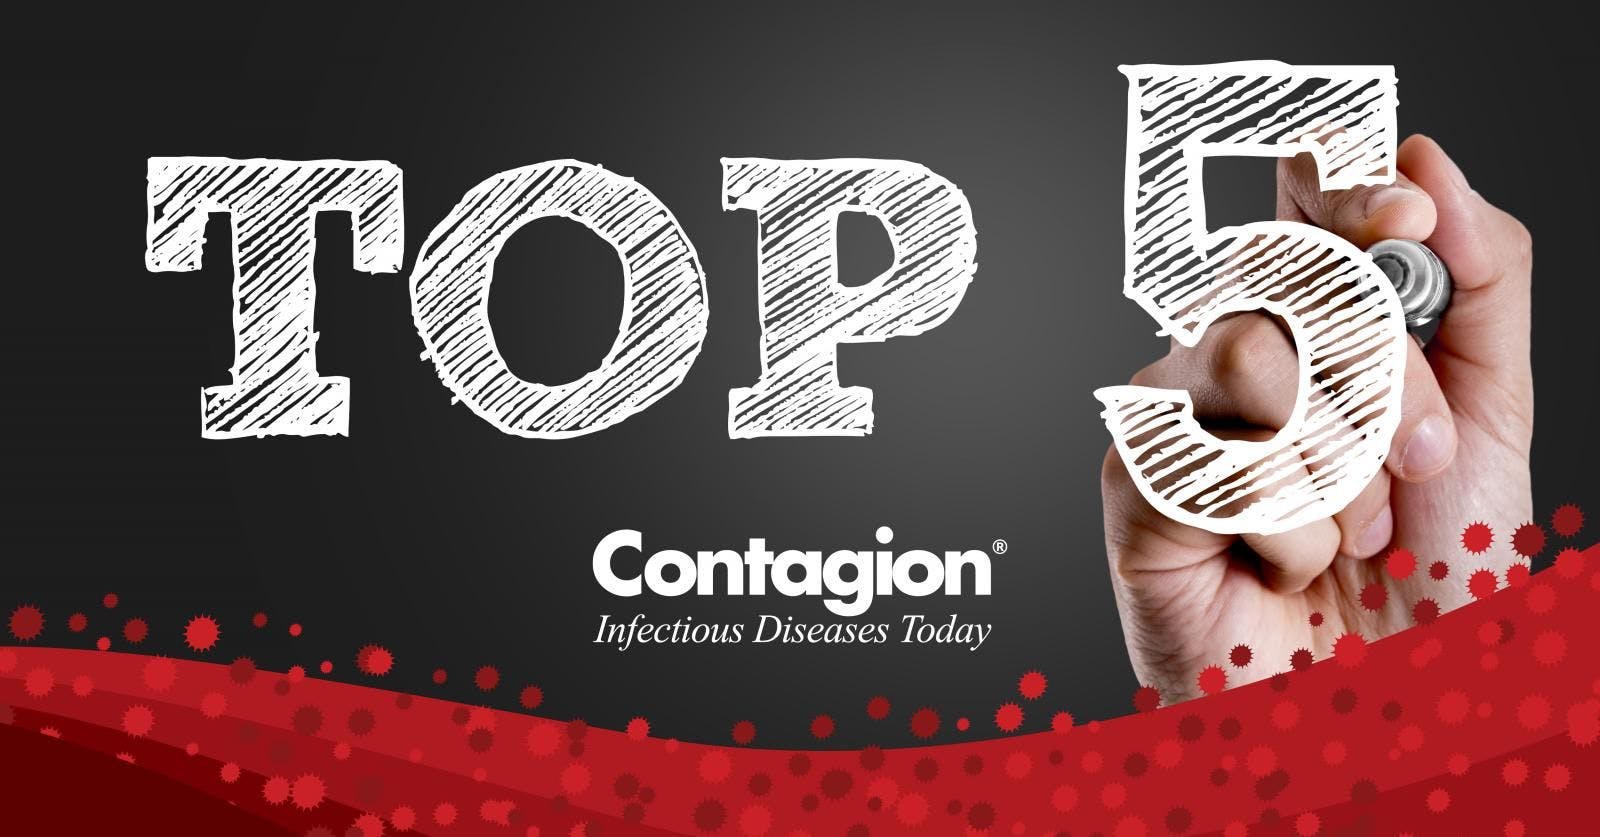 Top Infectious Disease News of the Week&mdash;September 1, 2019